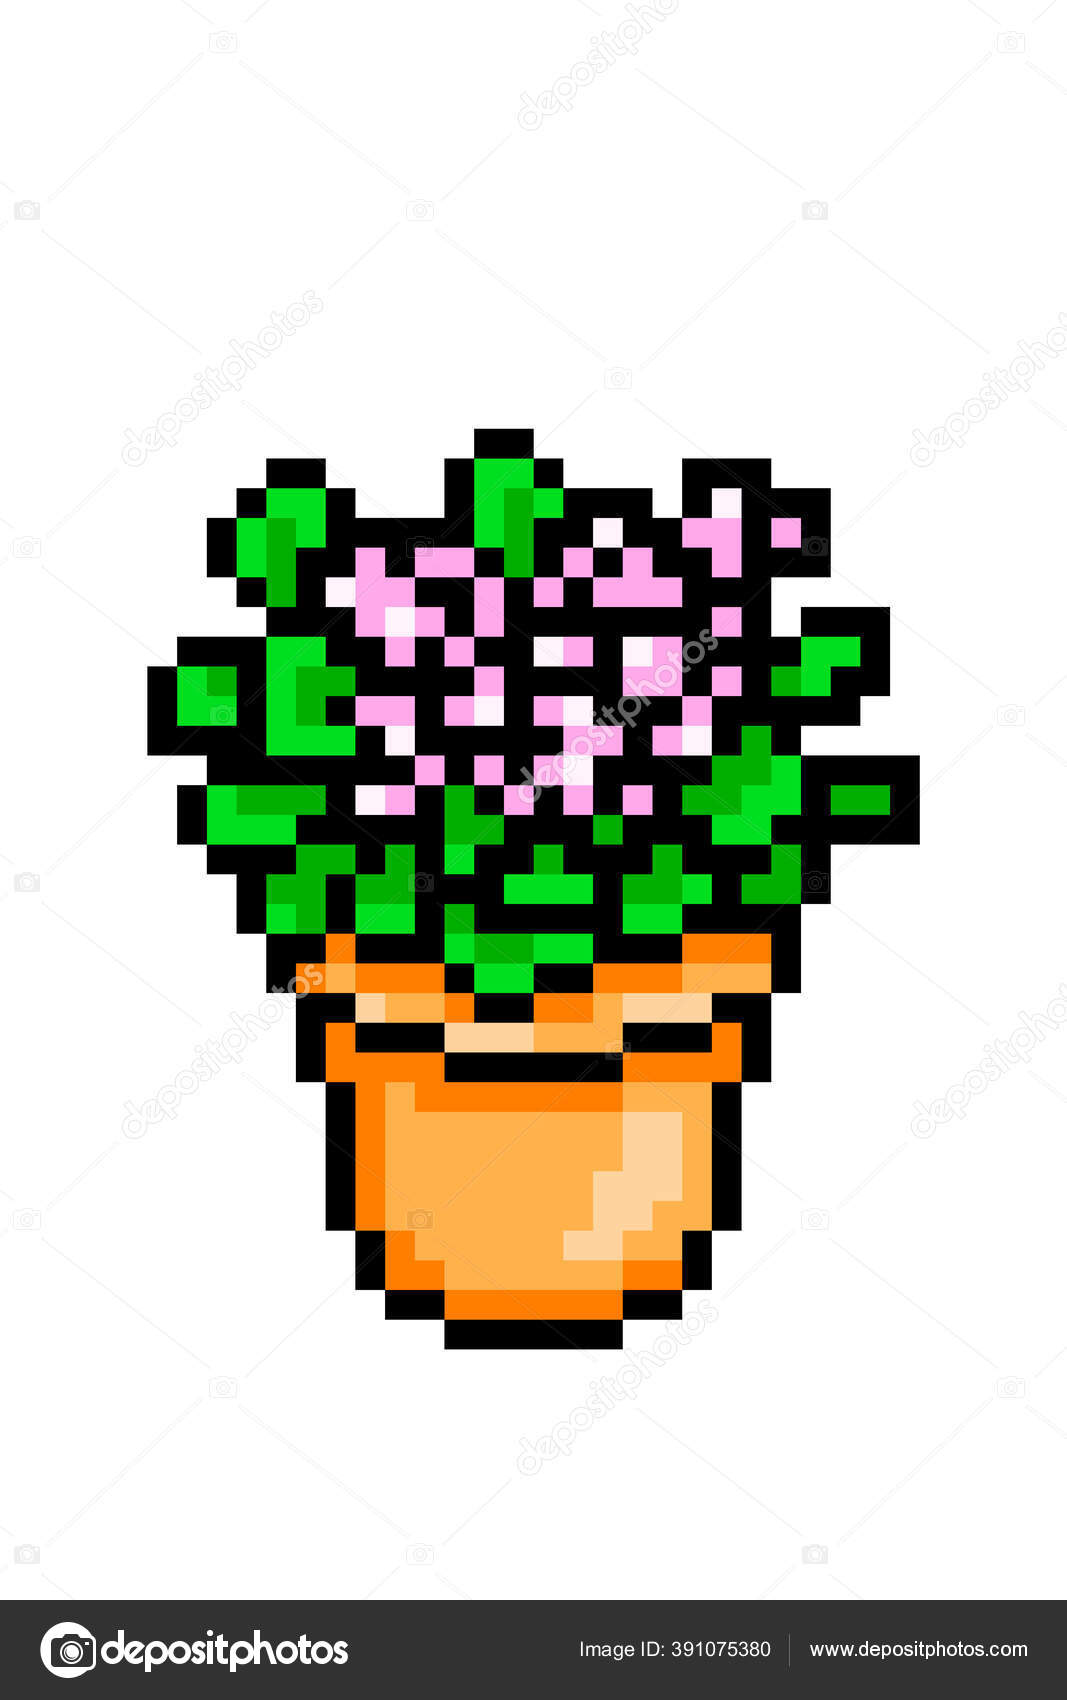 https://st4.depositphotos.com/3277955/39107/v/1600/depositphotos_391075380-stock-illustration-flowering-pink-kalanchoe-pot-pixel.jpg